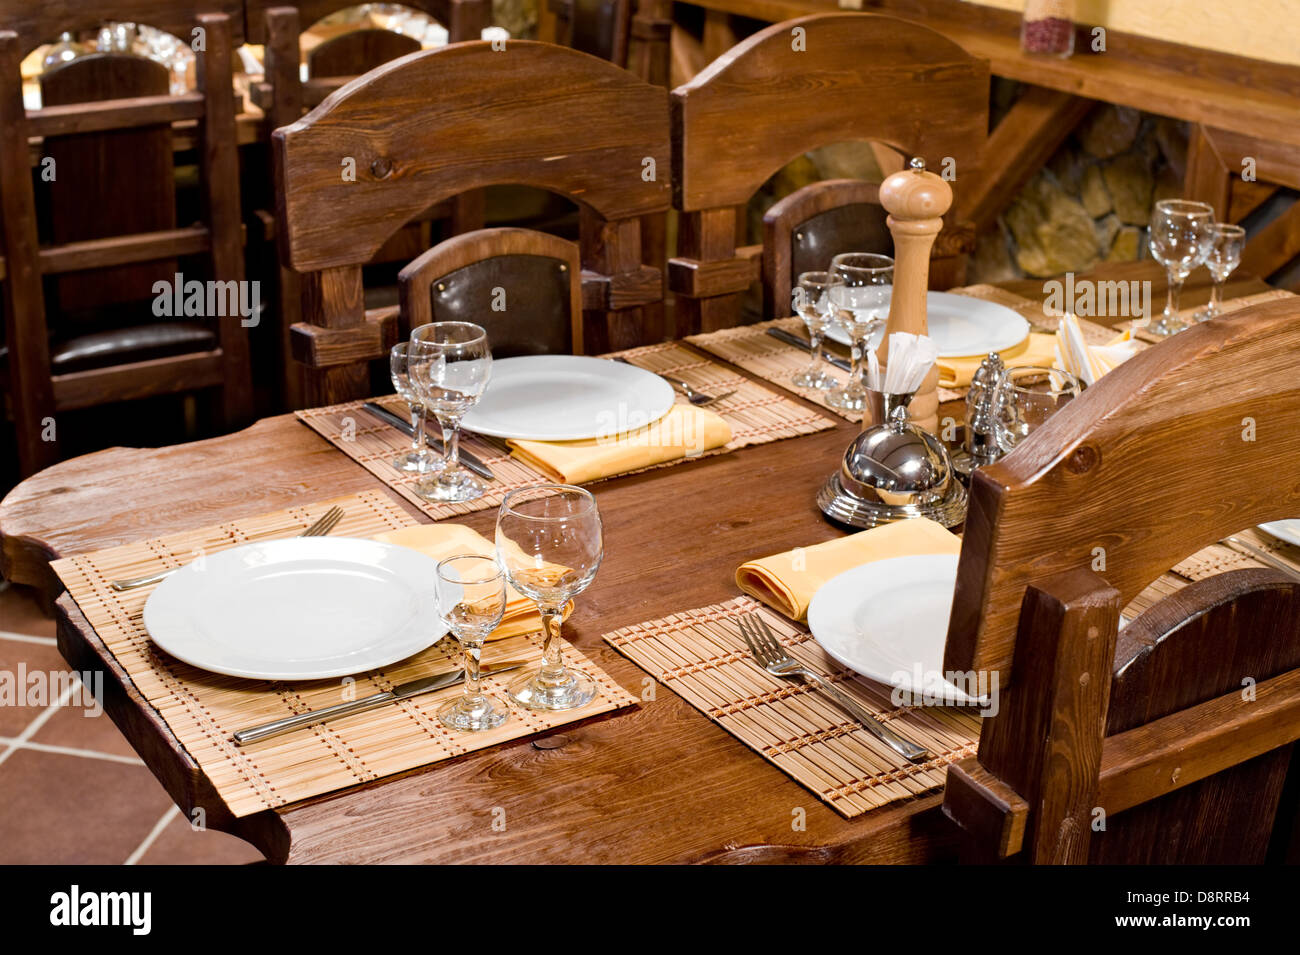 restaurant wooden interior Stock Photo